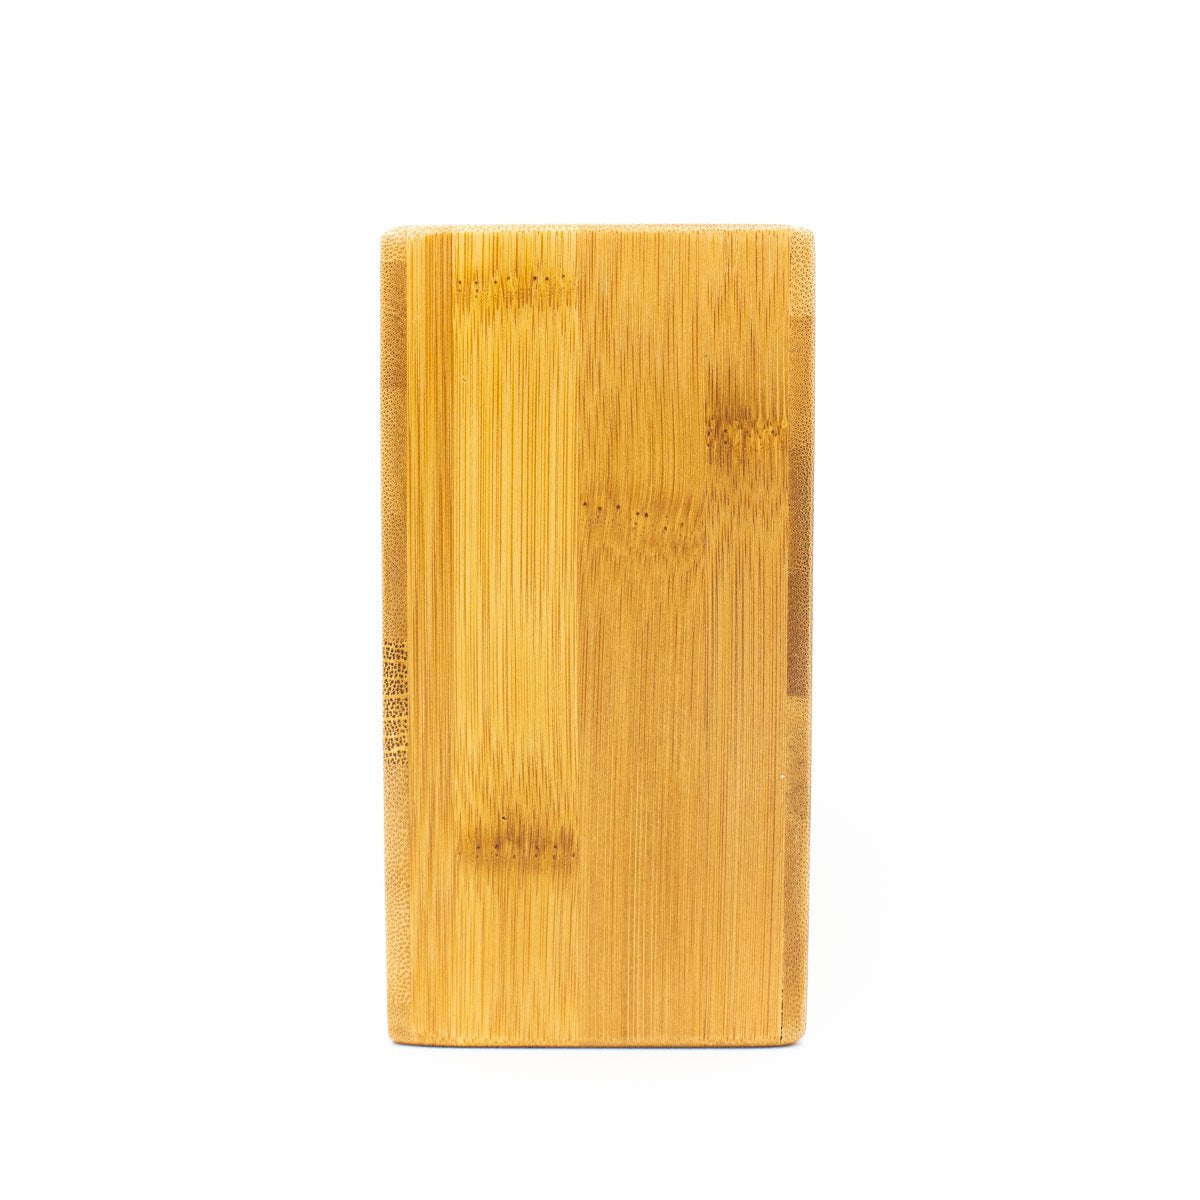 Bamboo Yoga Block